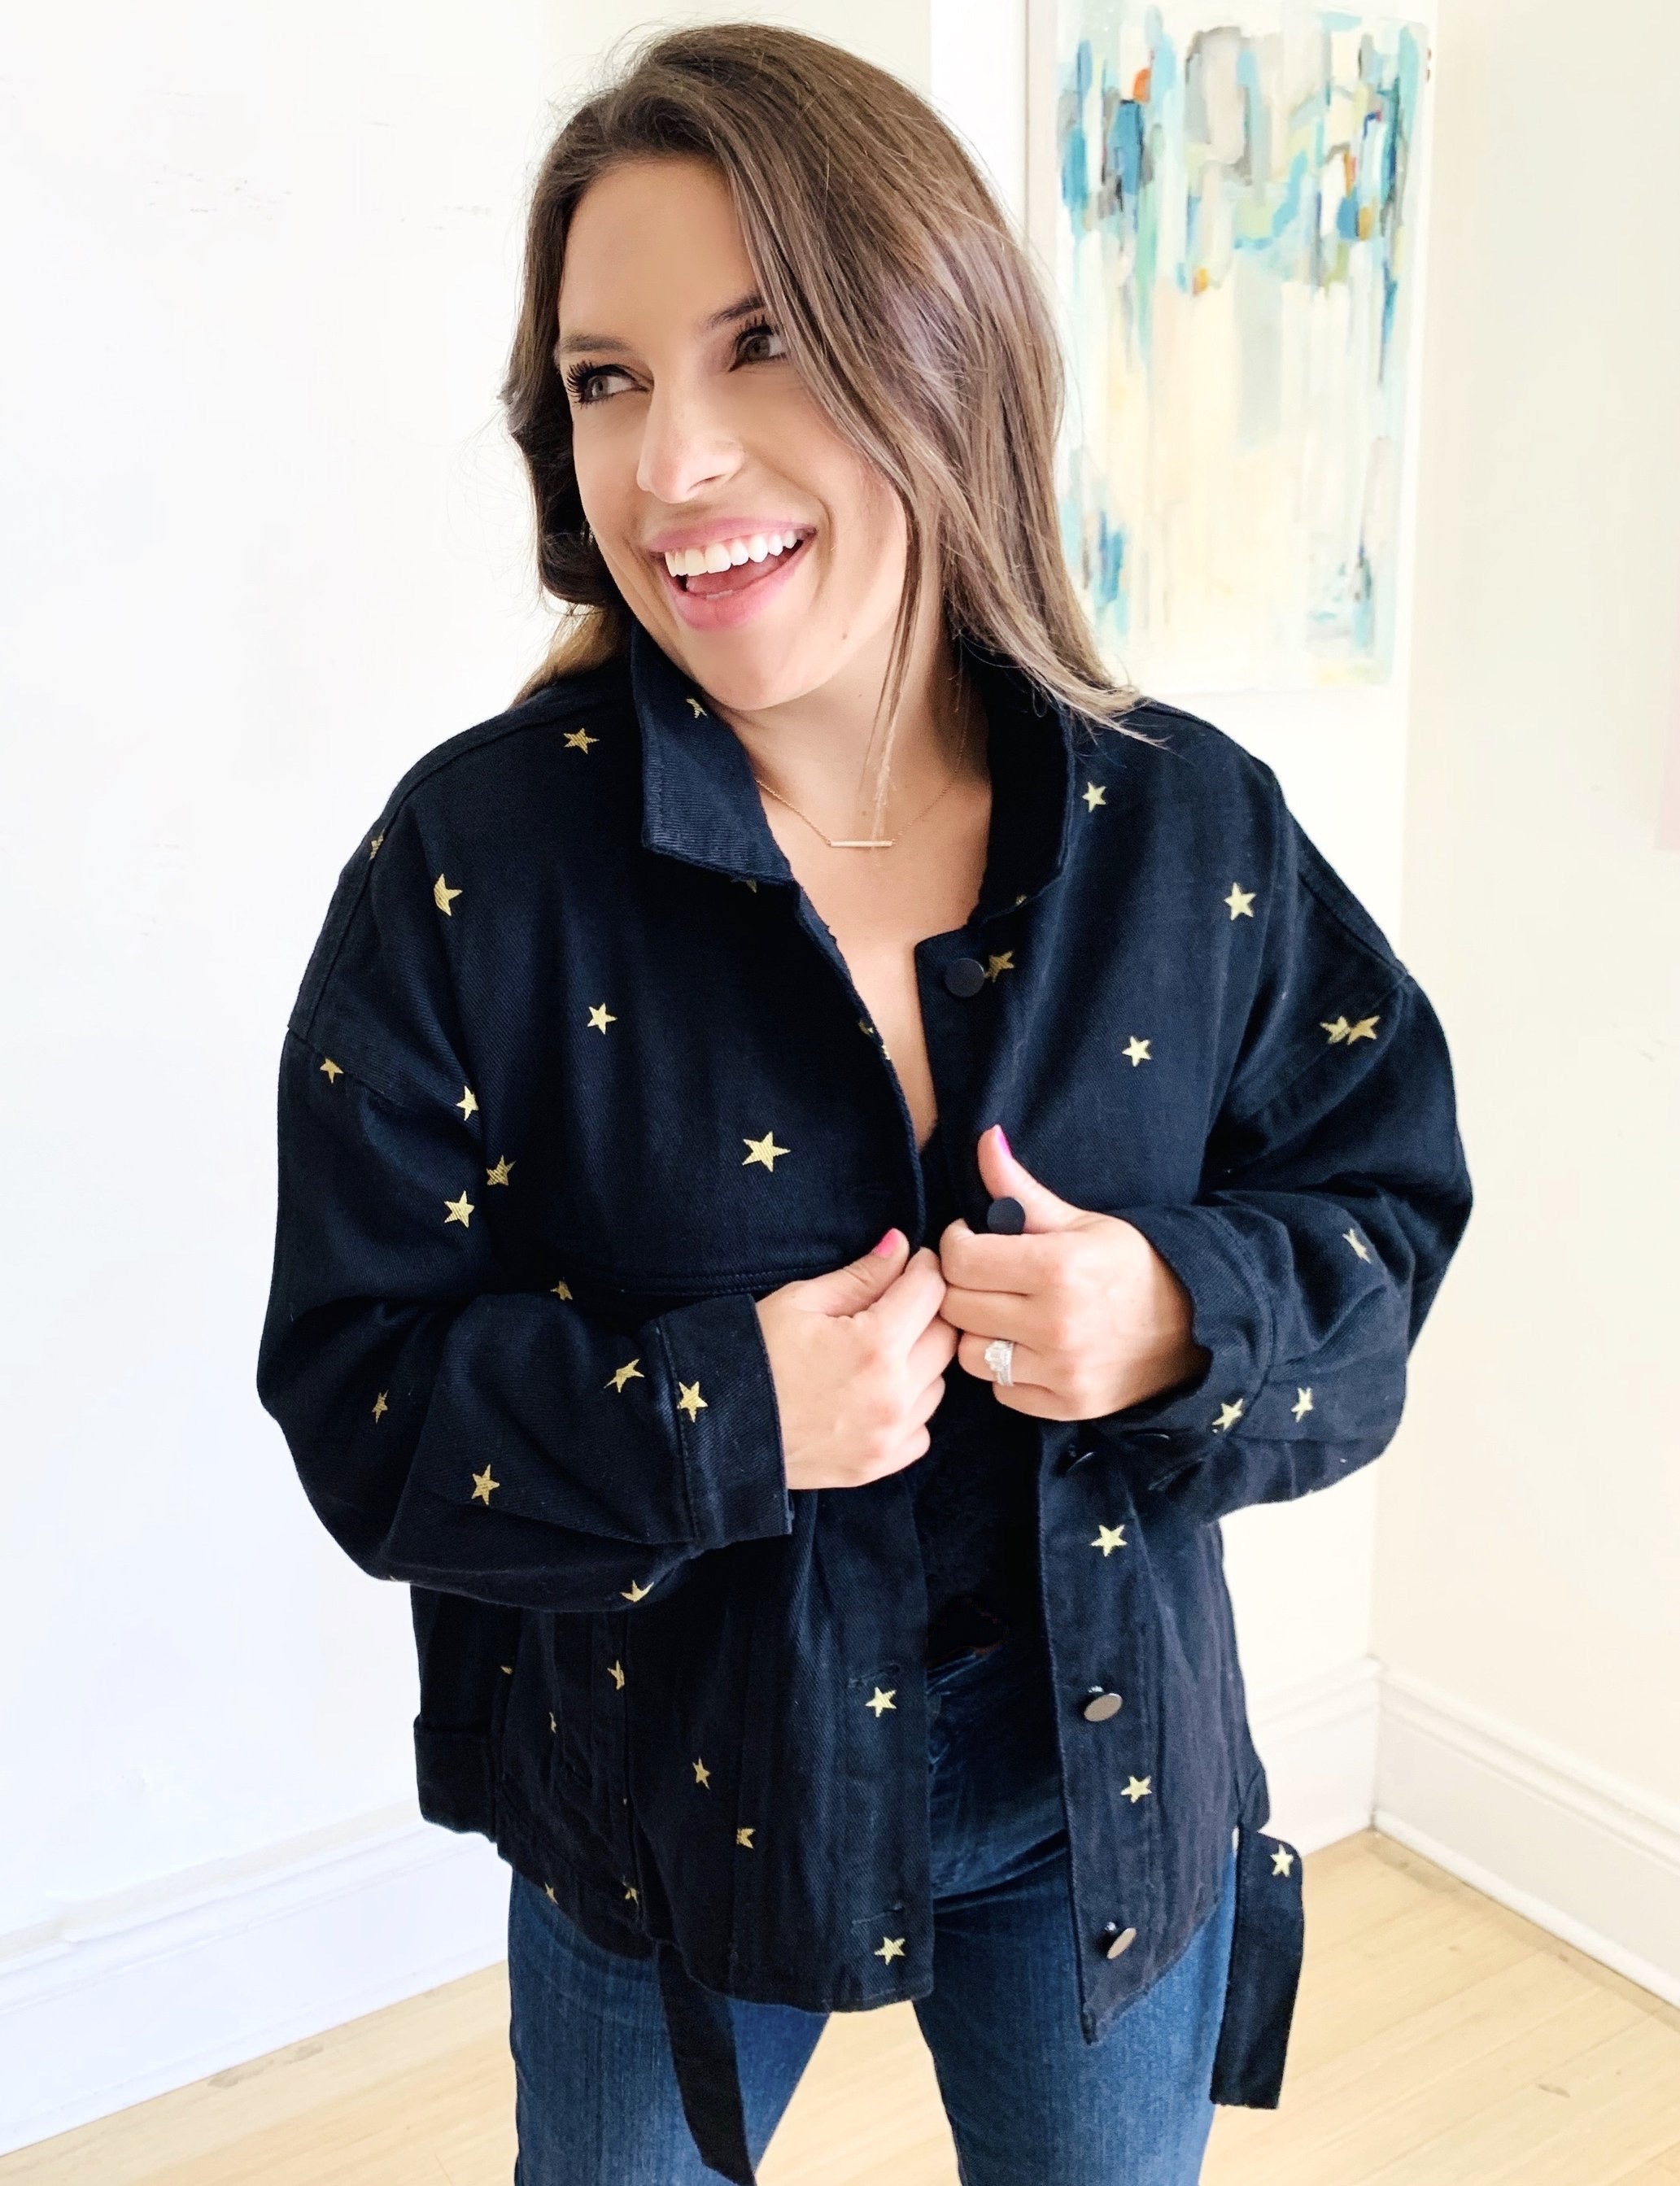 Bozanly Womens Fashion Star Print Frayed Hem Distressed Peplum Denim Jacket  Coat Tops(0204-Black-S) at Amazon Women's Coats Shop